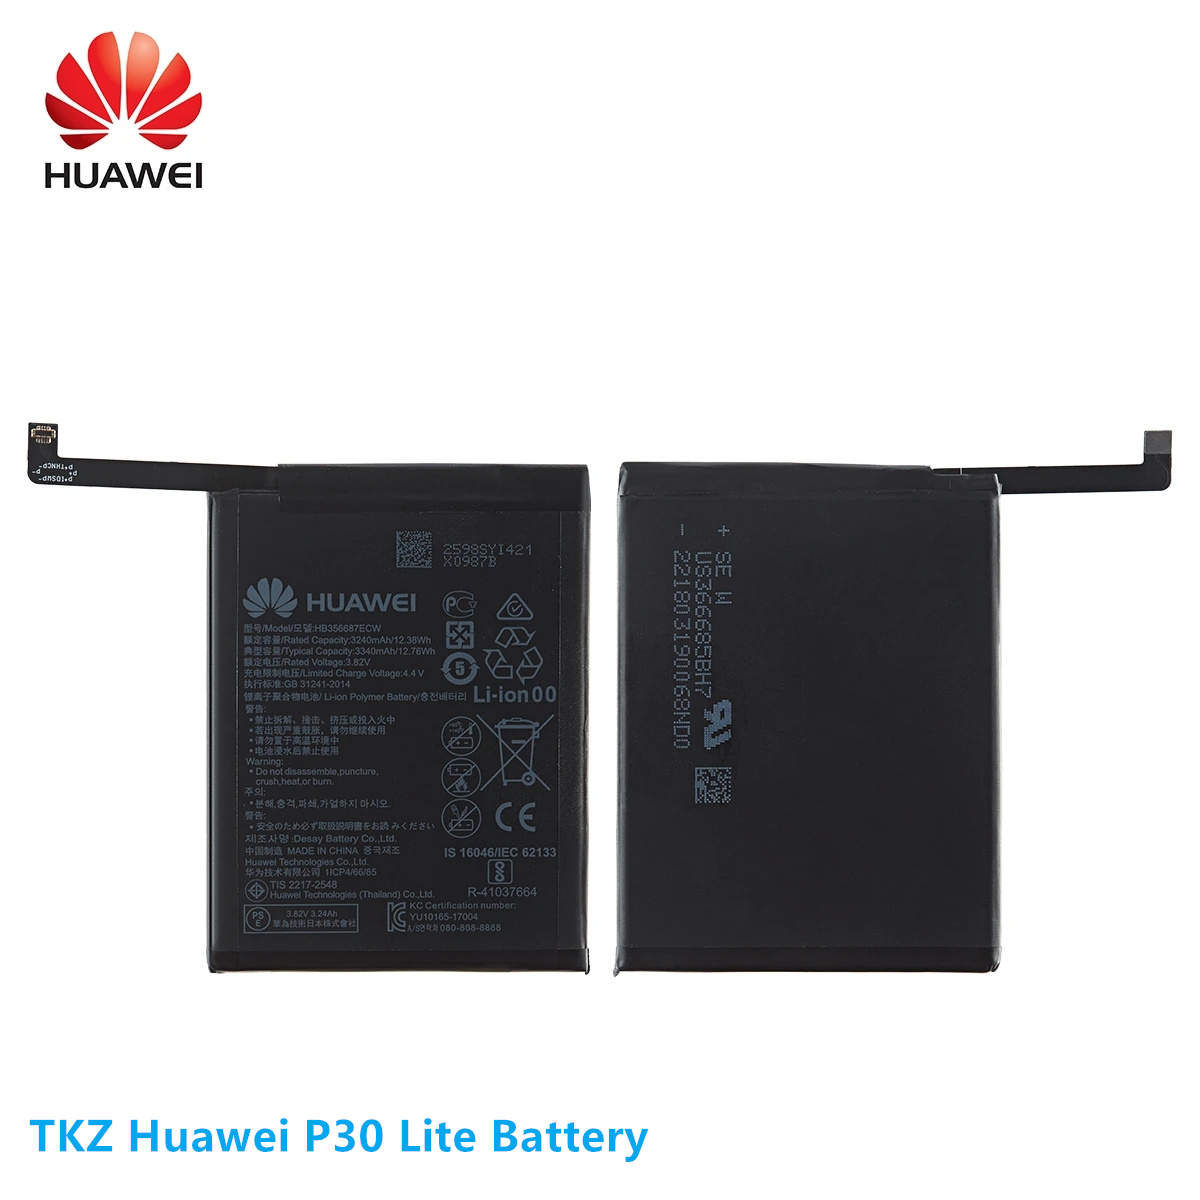 Huawei Mate 10 Lite Battery